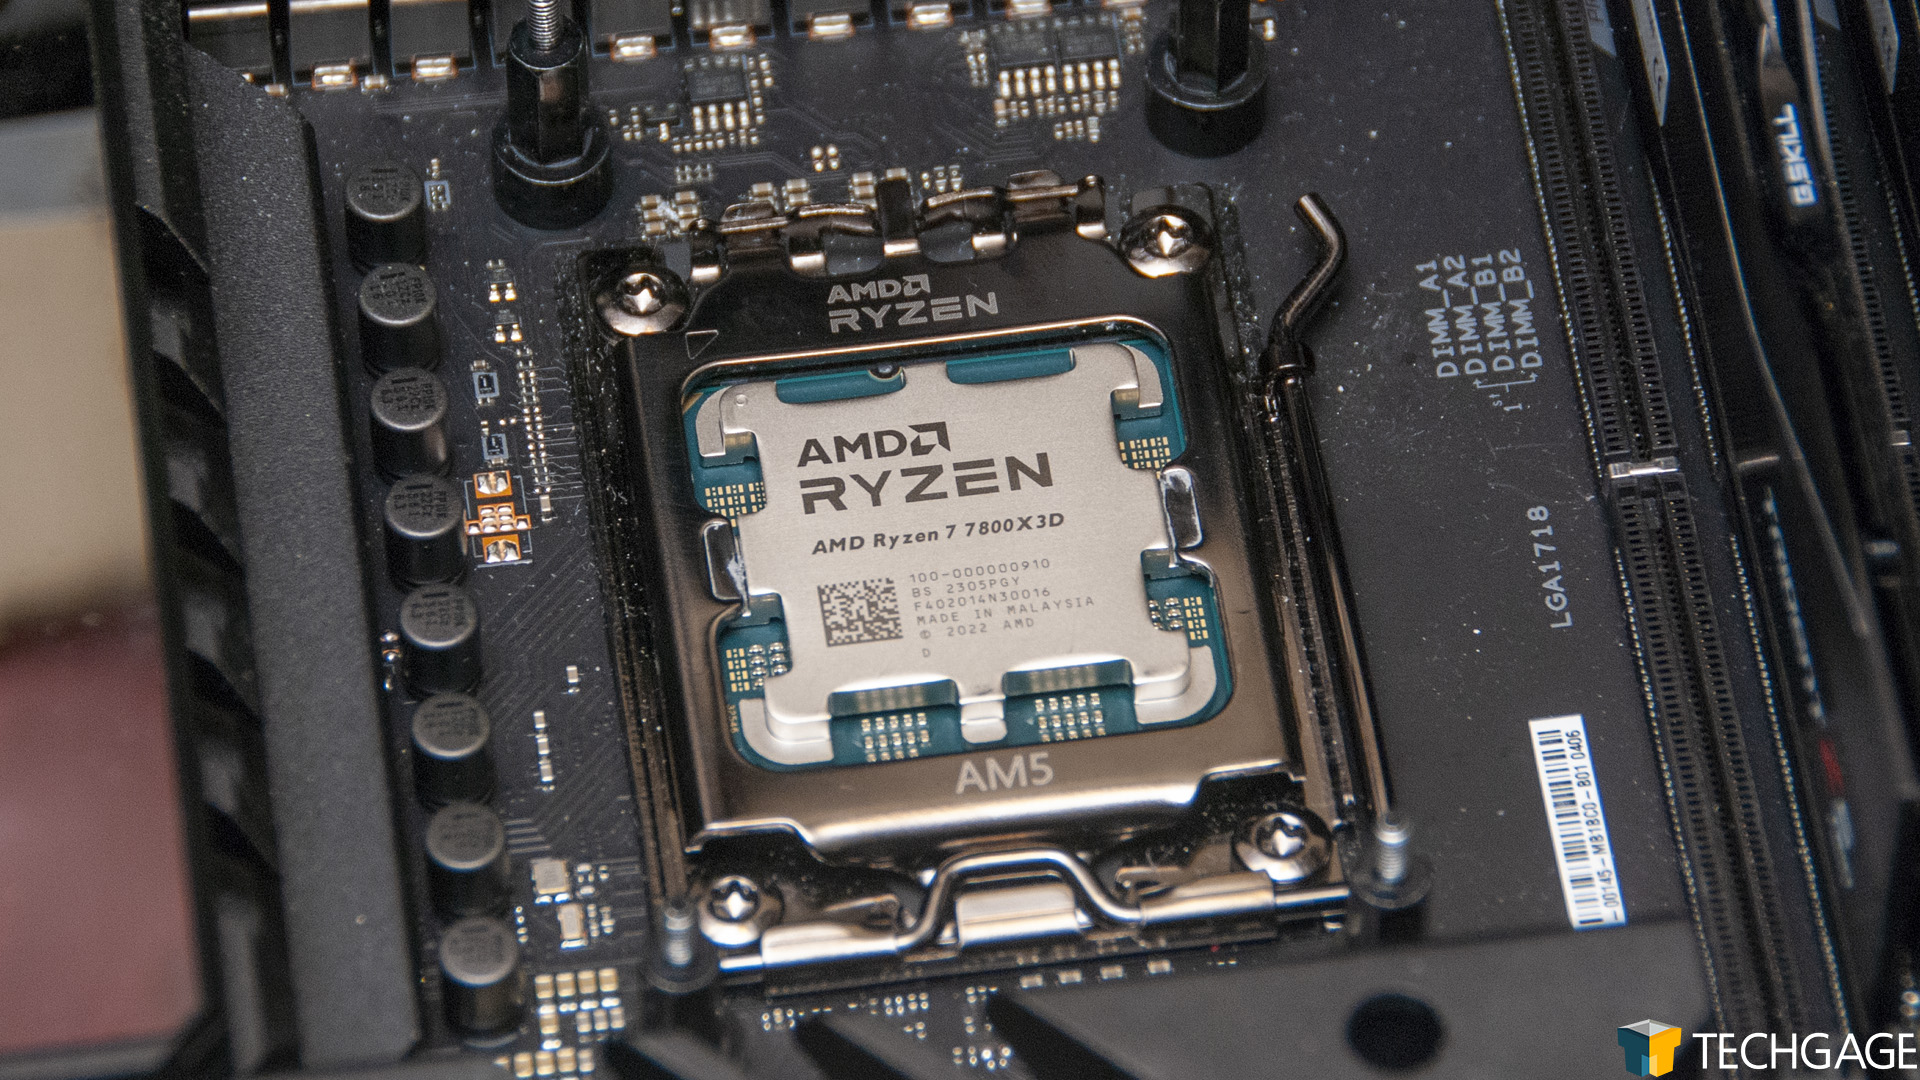 AMD Ryzen 7 7800X3D 3D V-Cache Processor